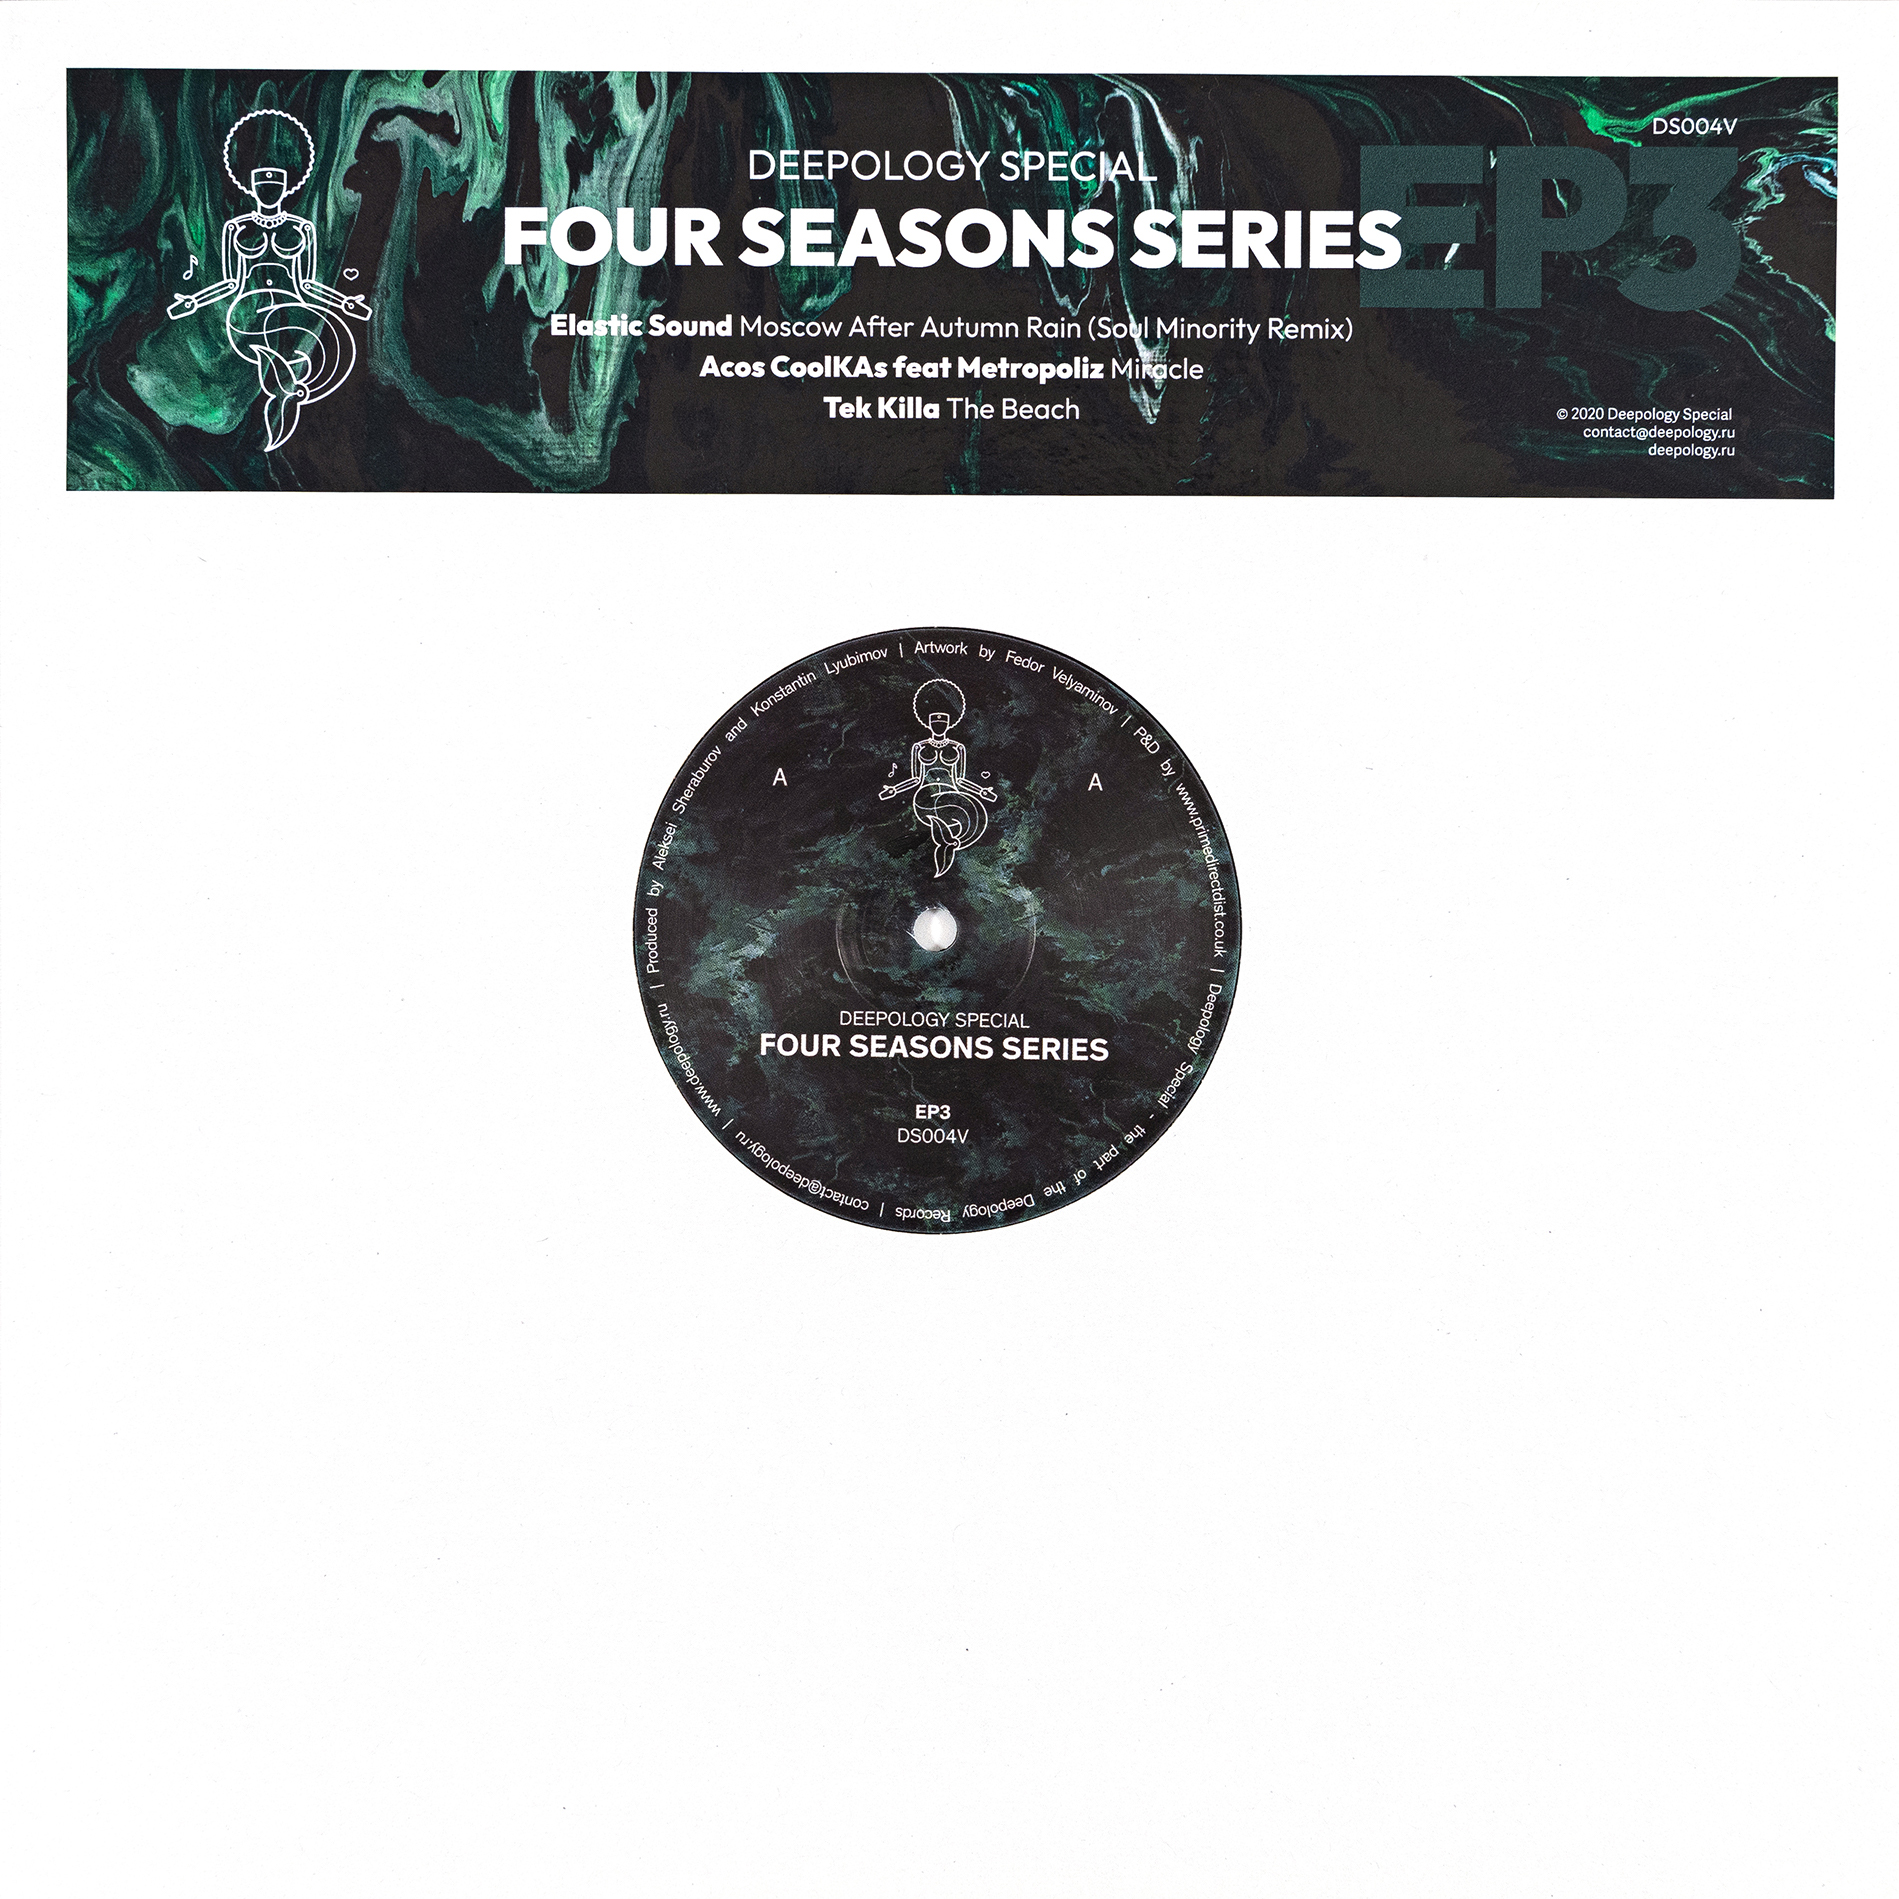 Four Seasons Series EP3